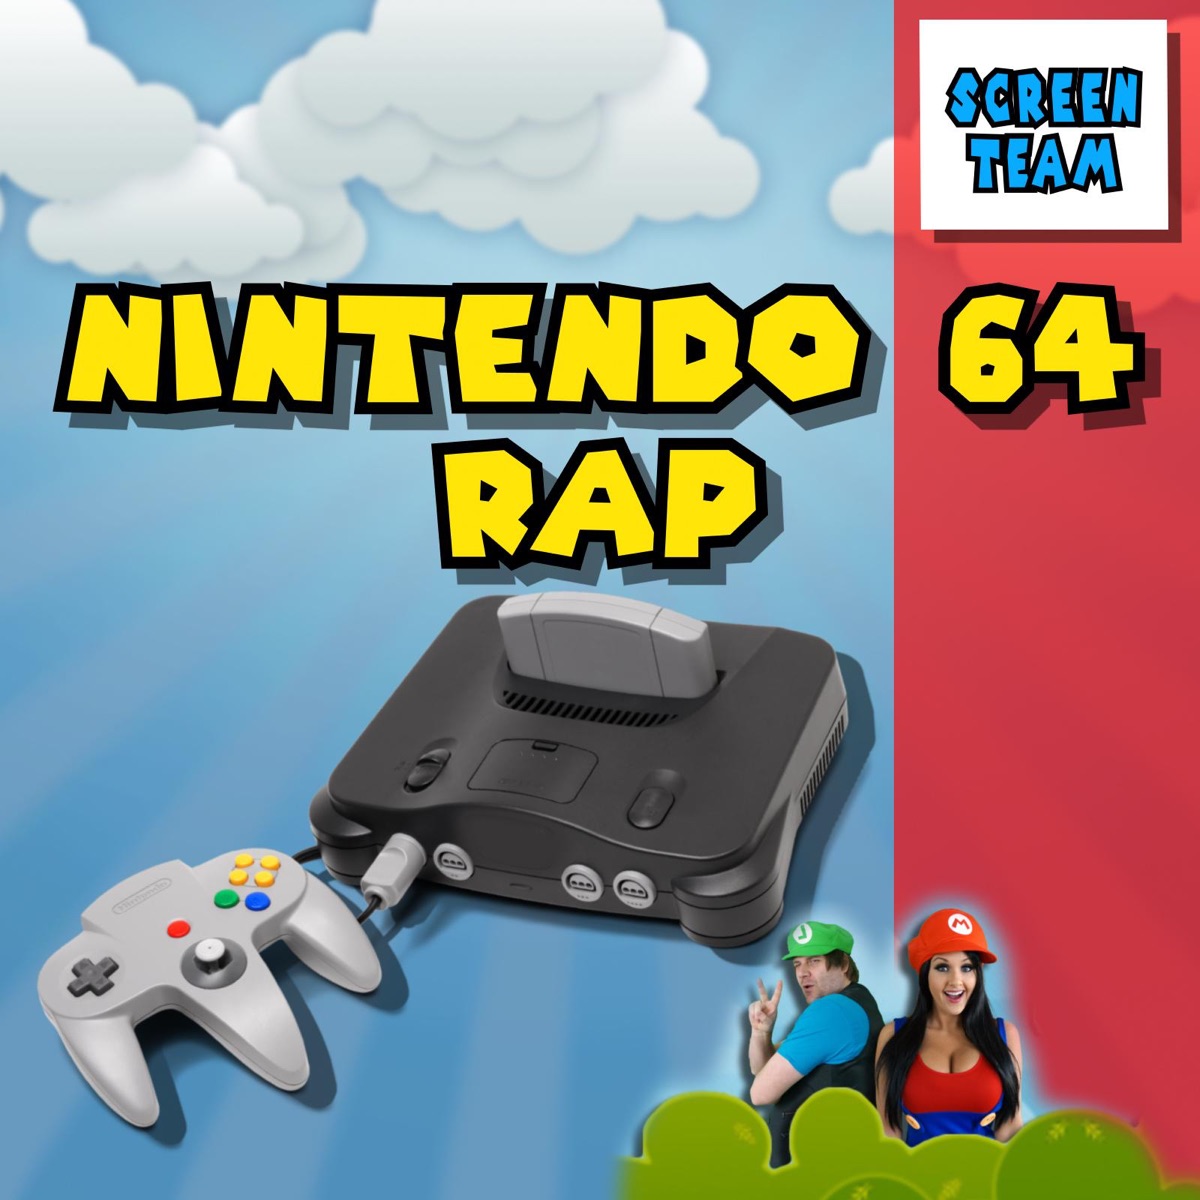 Nintendo 64 Rap (N64) - Single - Album by Screen Team - Apple Music